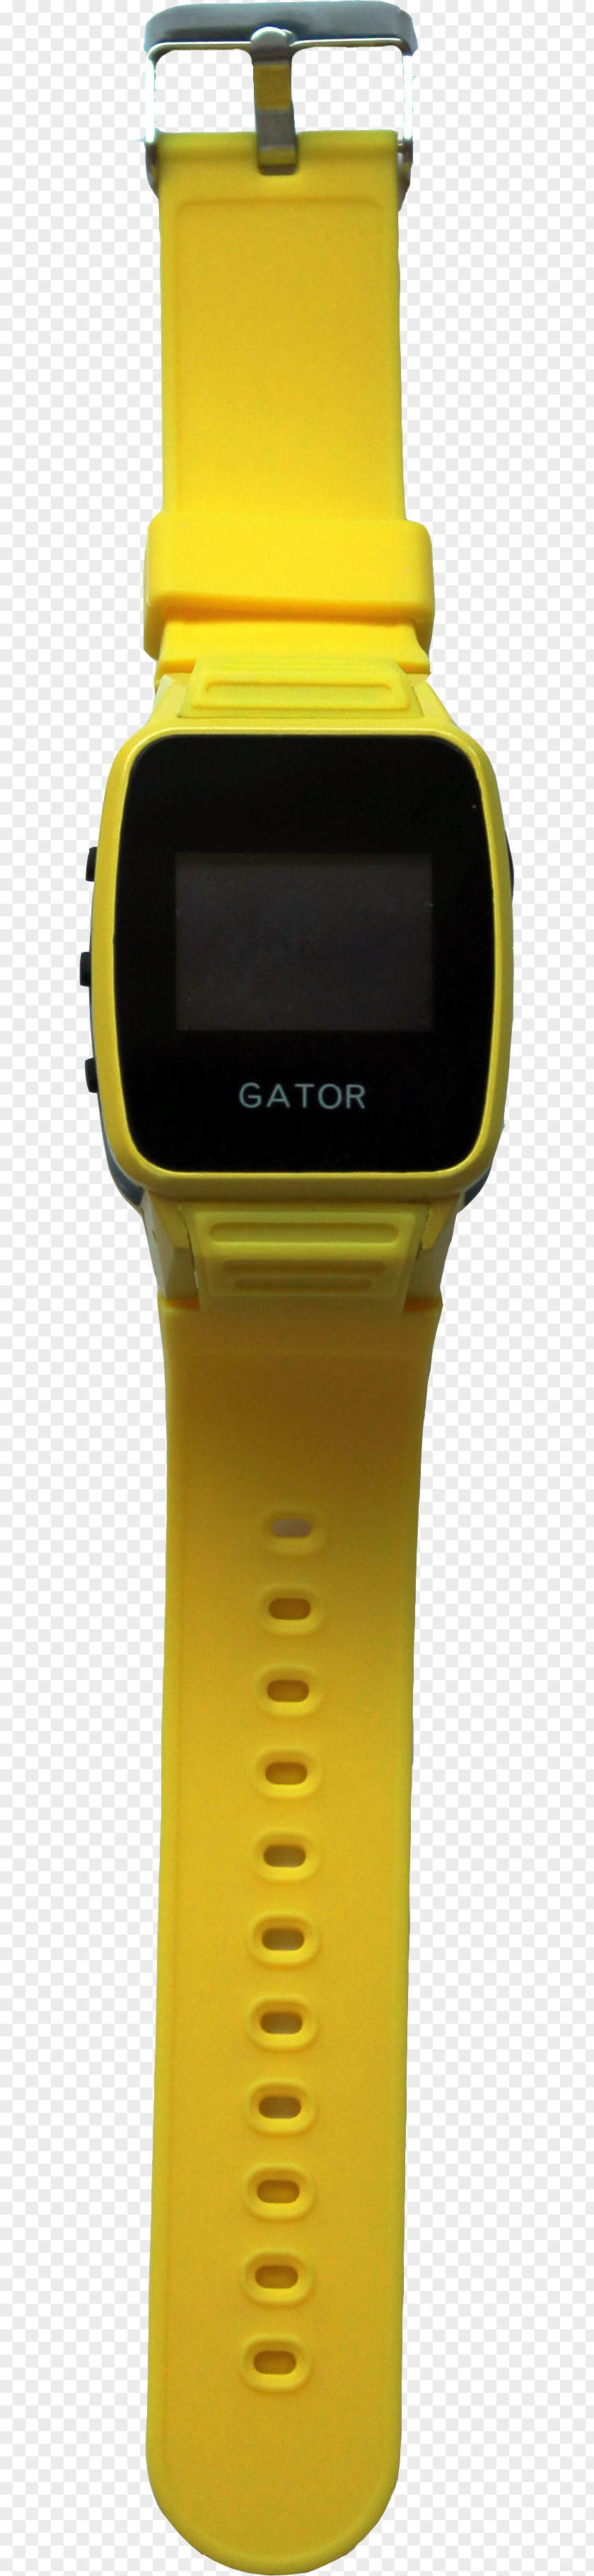 Wrist Band GPS Navigation Systems Watch Tracking Unit Digital Clock PNG